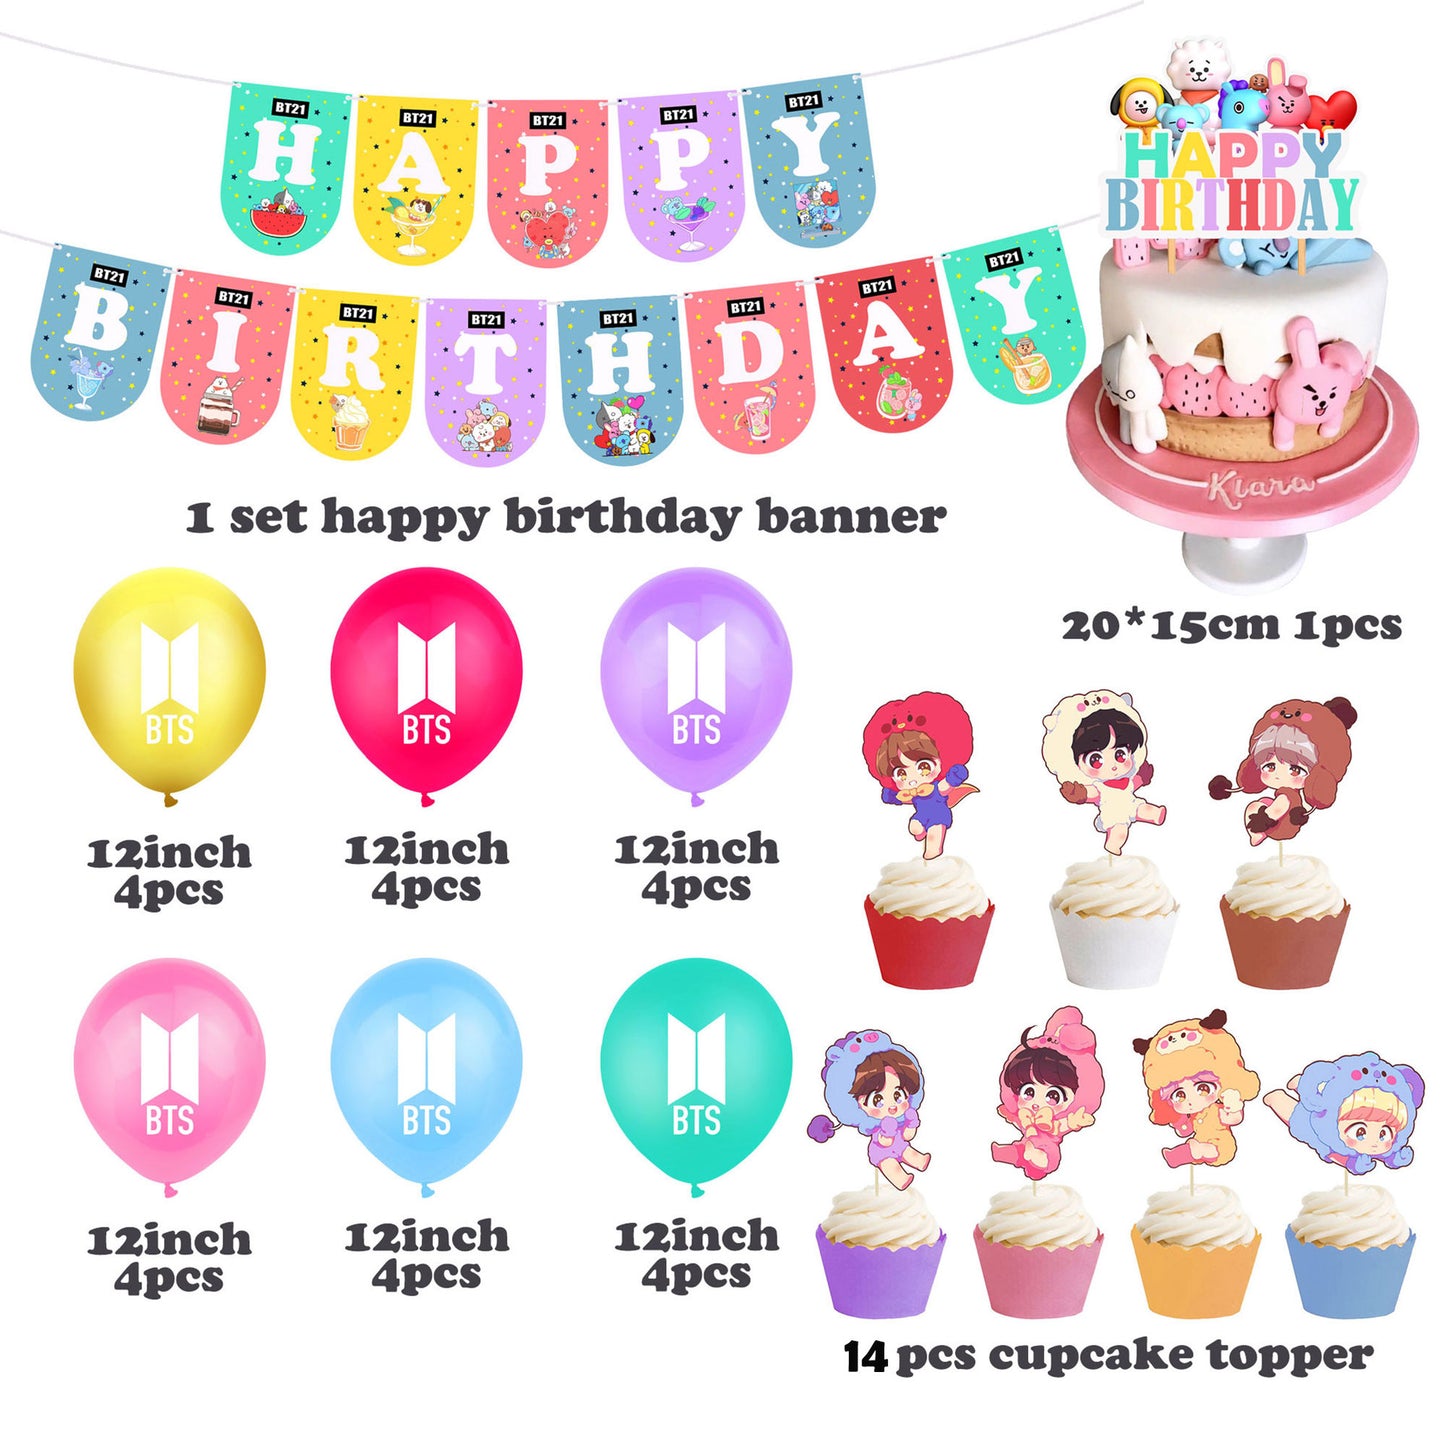 BTS (Bangtan Boys Band) Birthday Party Decorations.